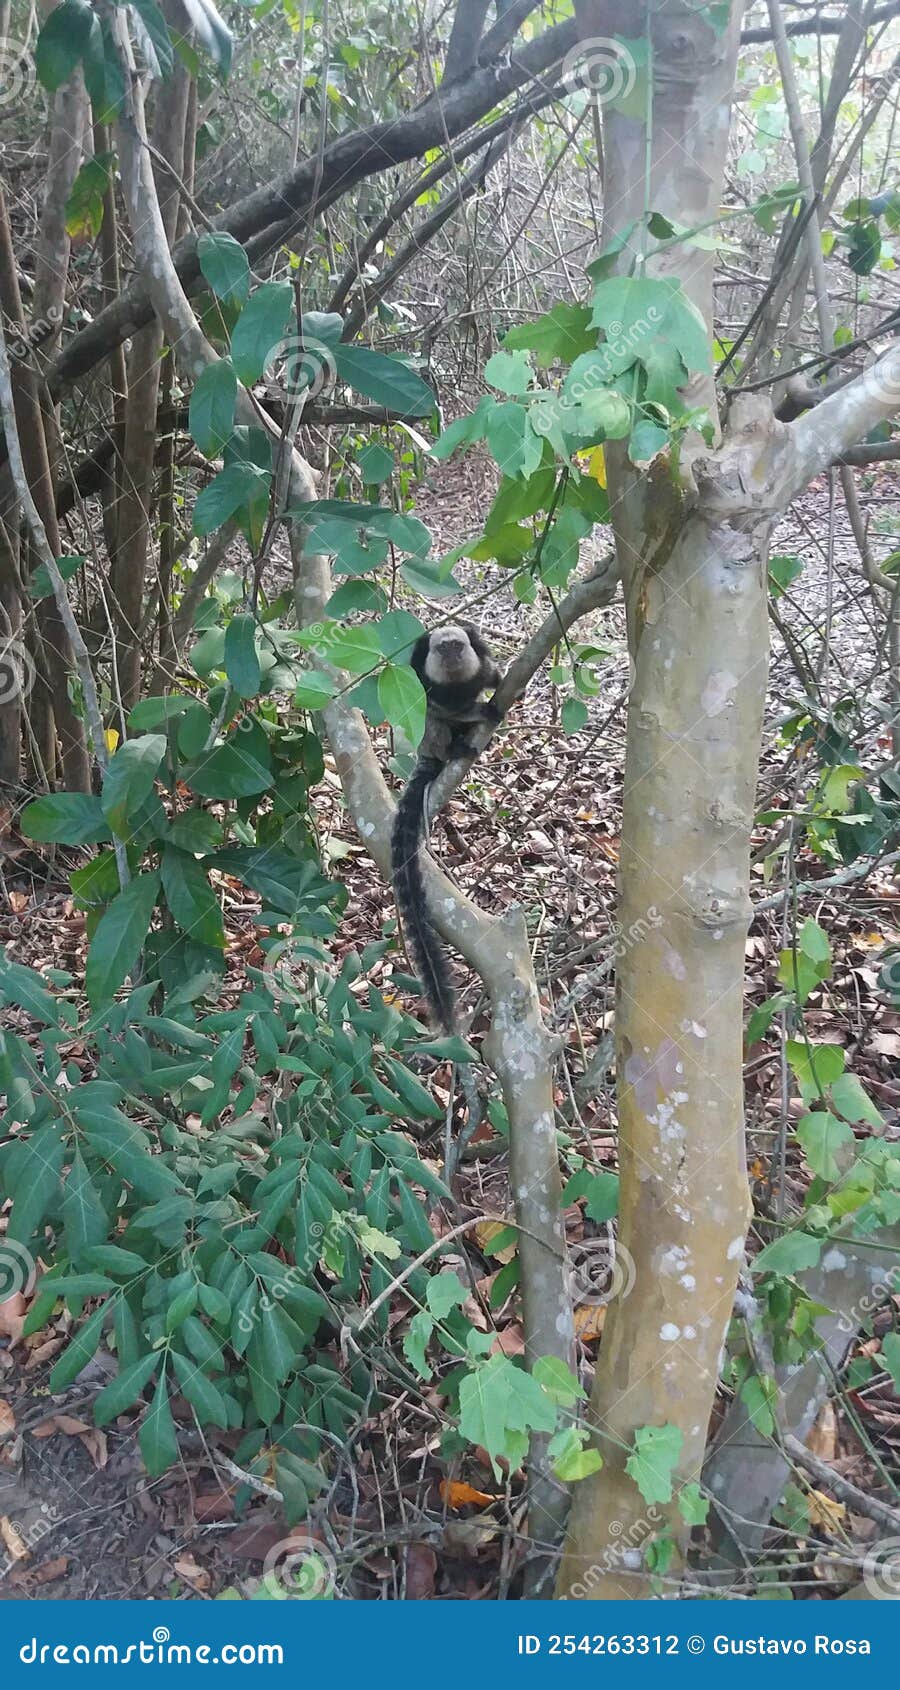 macaco na trilha parque da pescaria, guarapari, espÃÂ­rito santo. mata atlÃÂ¢ntica exuberante